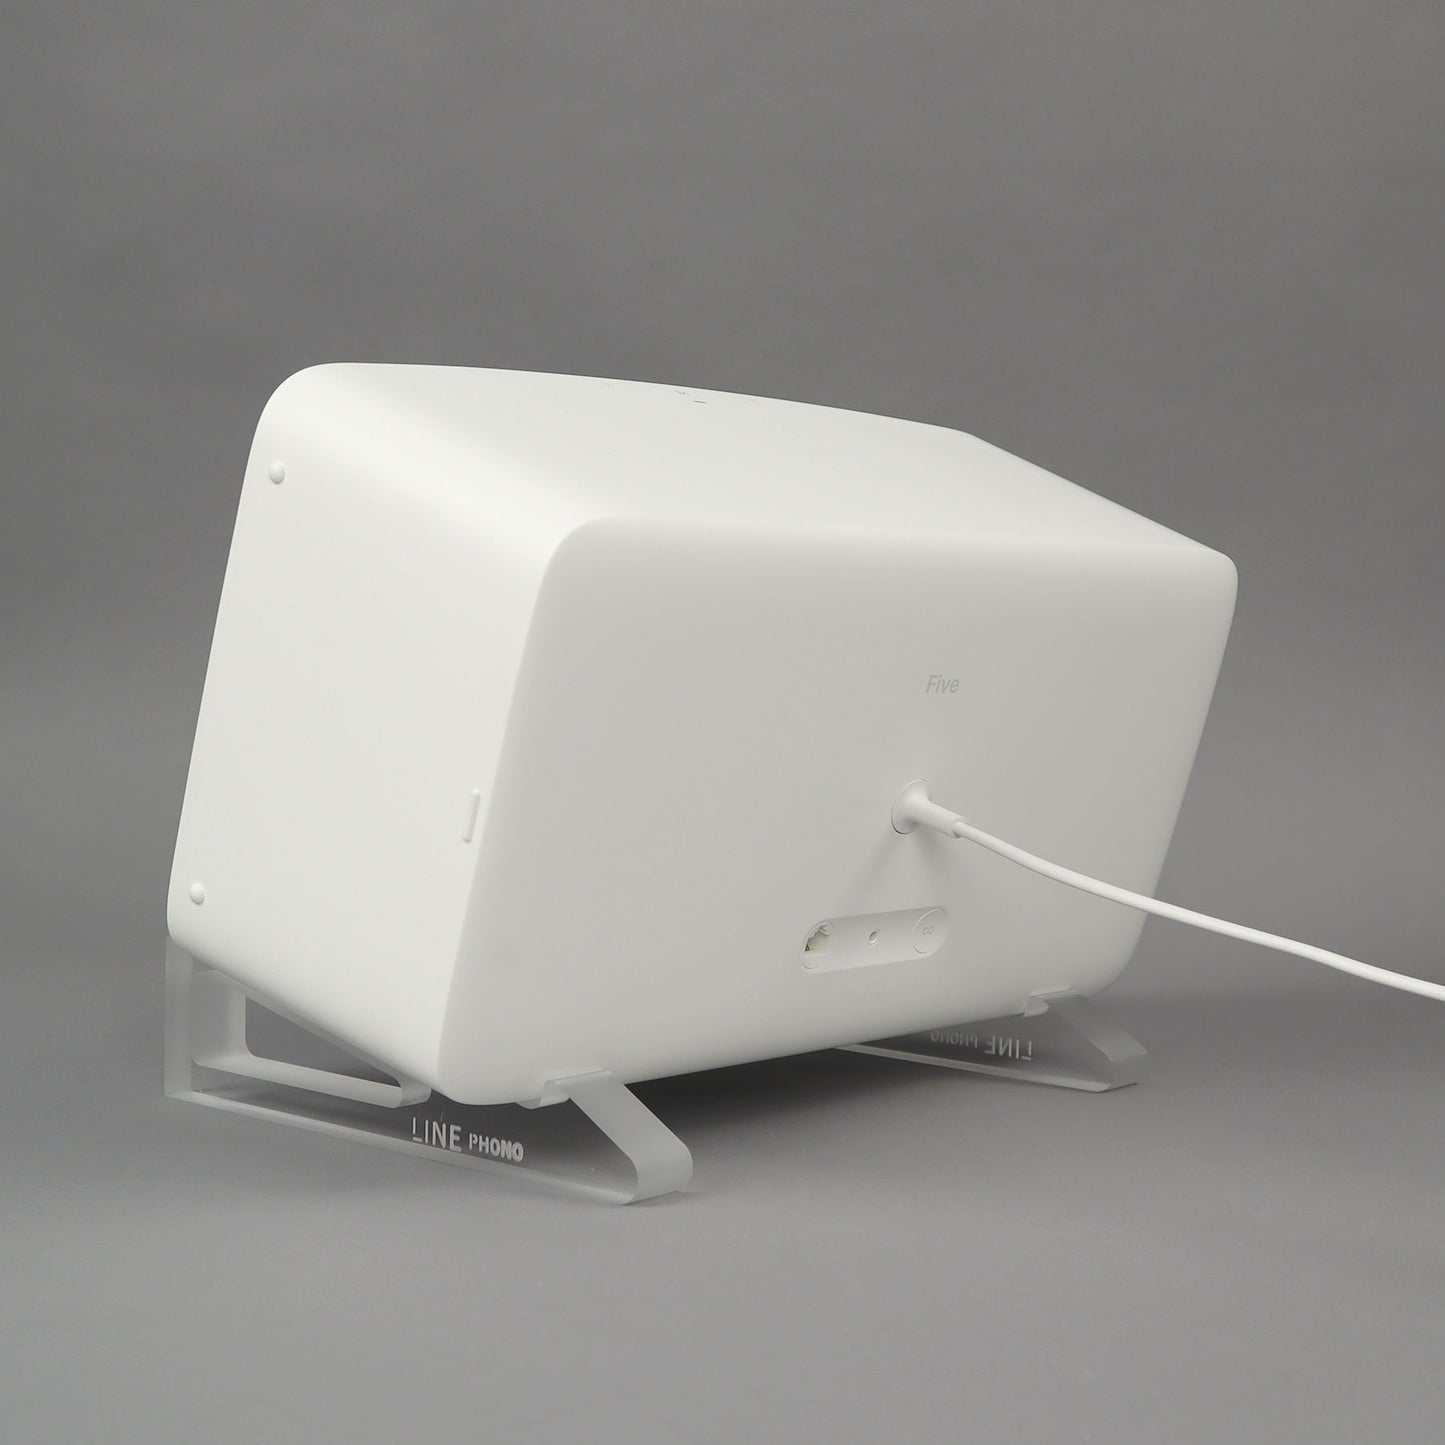 Line Phono: Acrylic Angler Speaker Stands